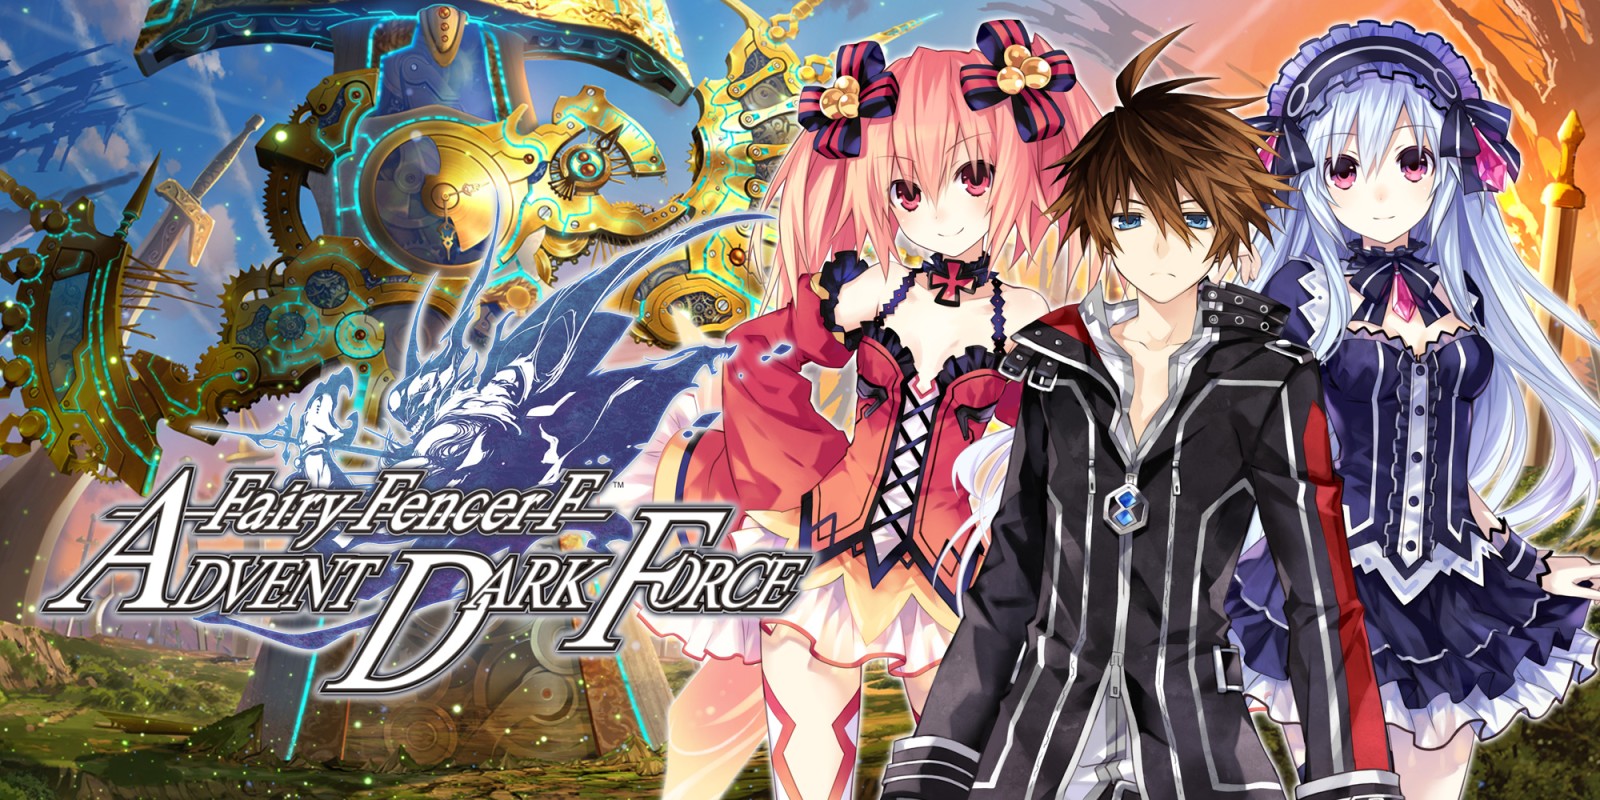 Fairy Fencer F Advent Dark Force | Nintendo Switch download software |  Games | Nintendo